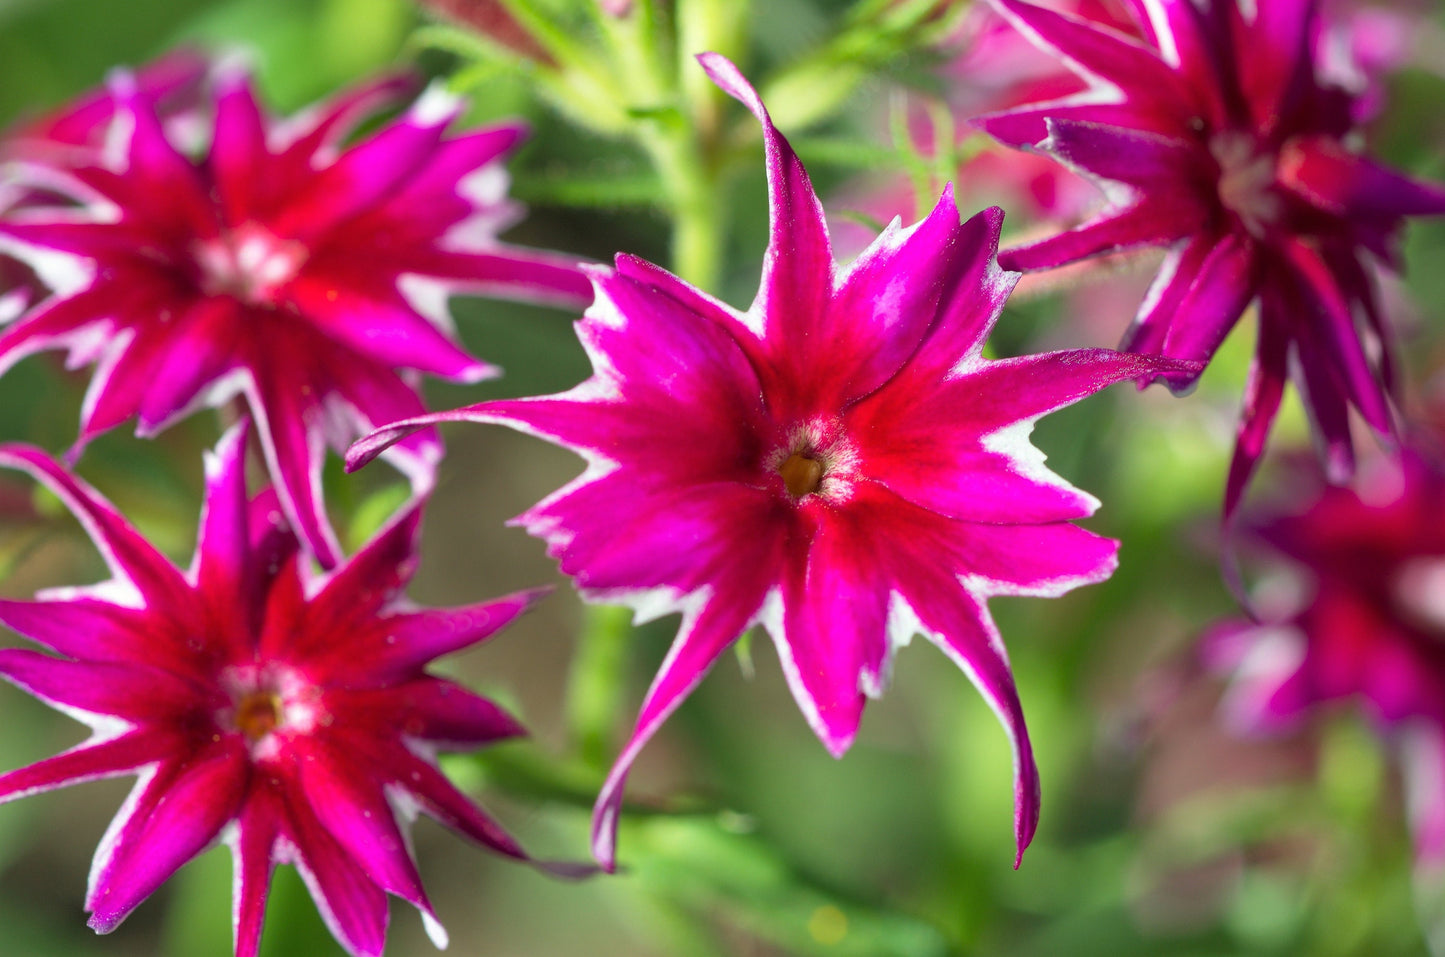 100 TWINKLE DWARF PHLOX Drummondii Cuspidata var. Stellaris Star Mix Two Tone Mixed Colors Pink Purple Red White Flower Seeds